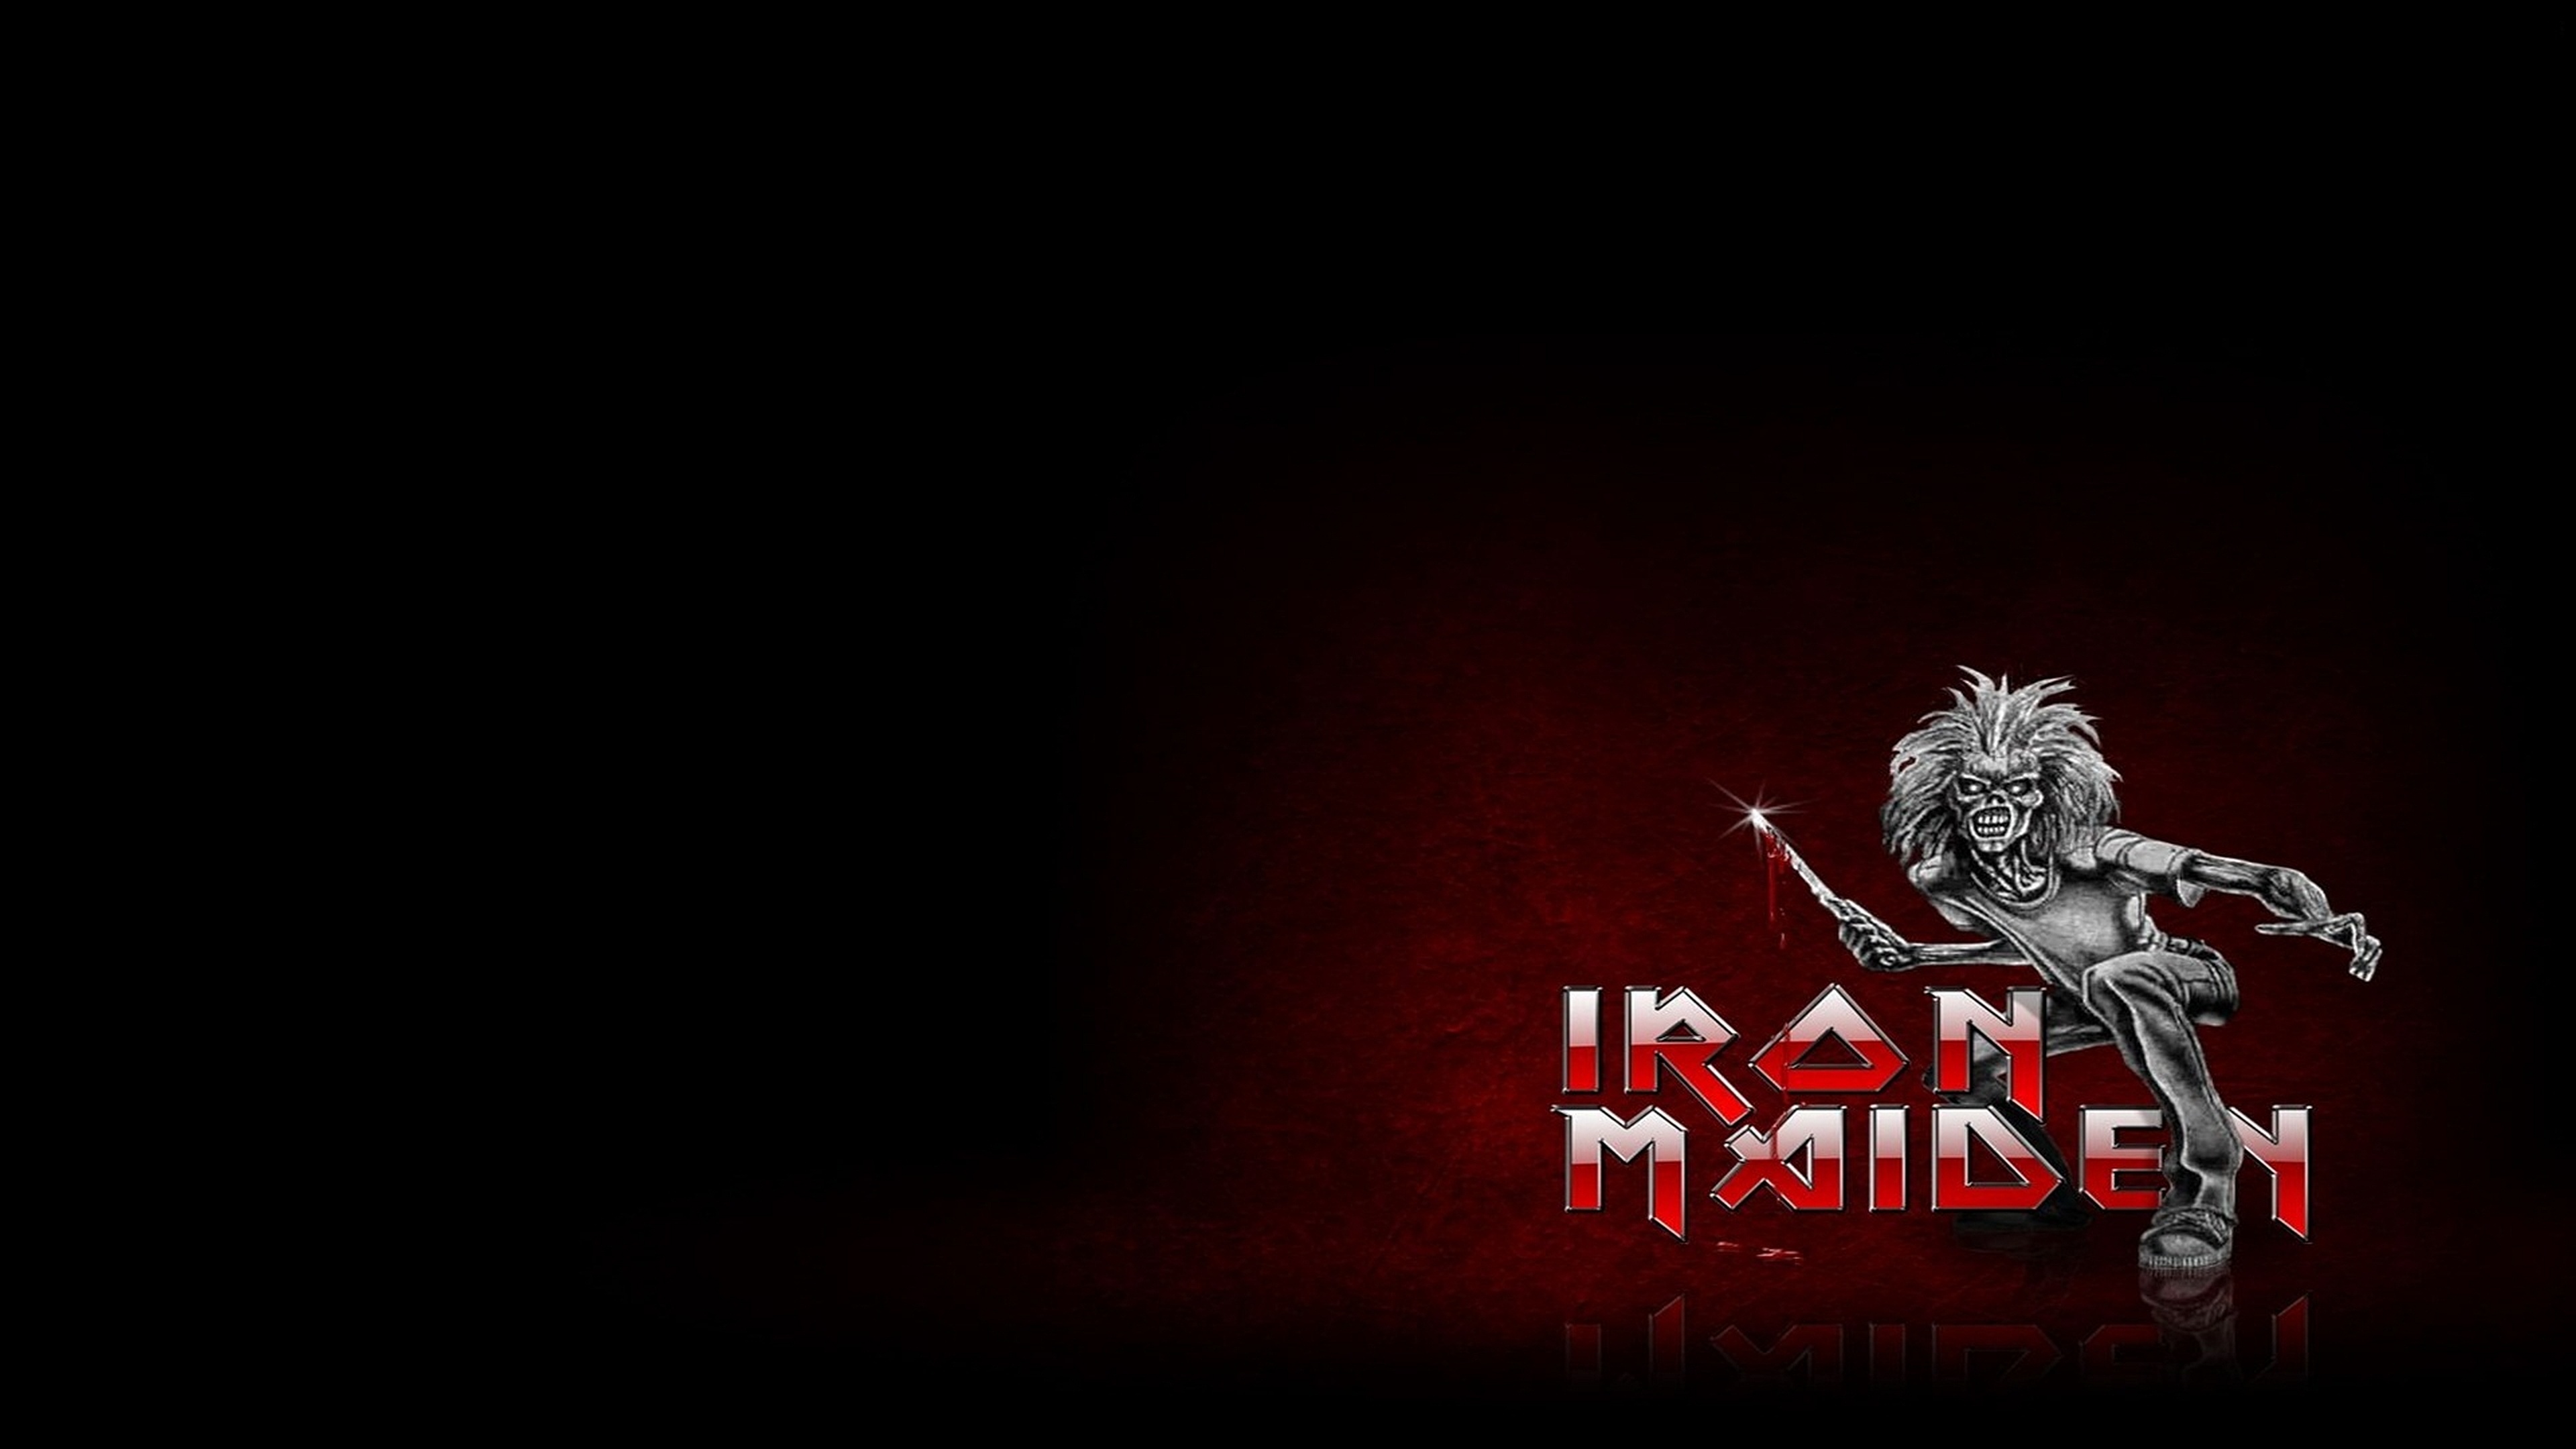 Iron Maiden Band Music, 4K Ultra HD wallpaper, Immersive visuals, Concert atmosphere, 3840x2160 4K Desktop